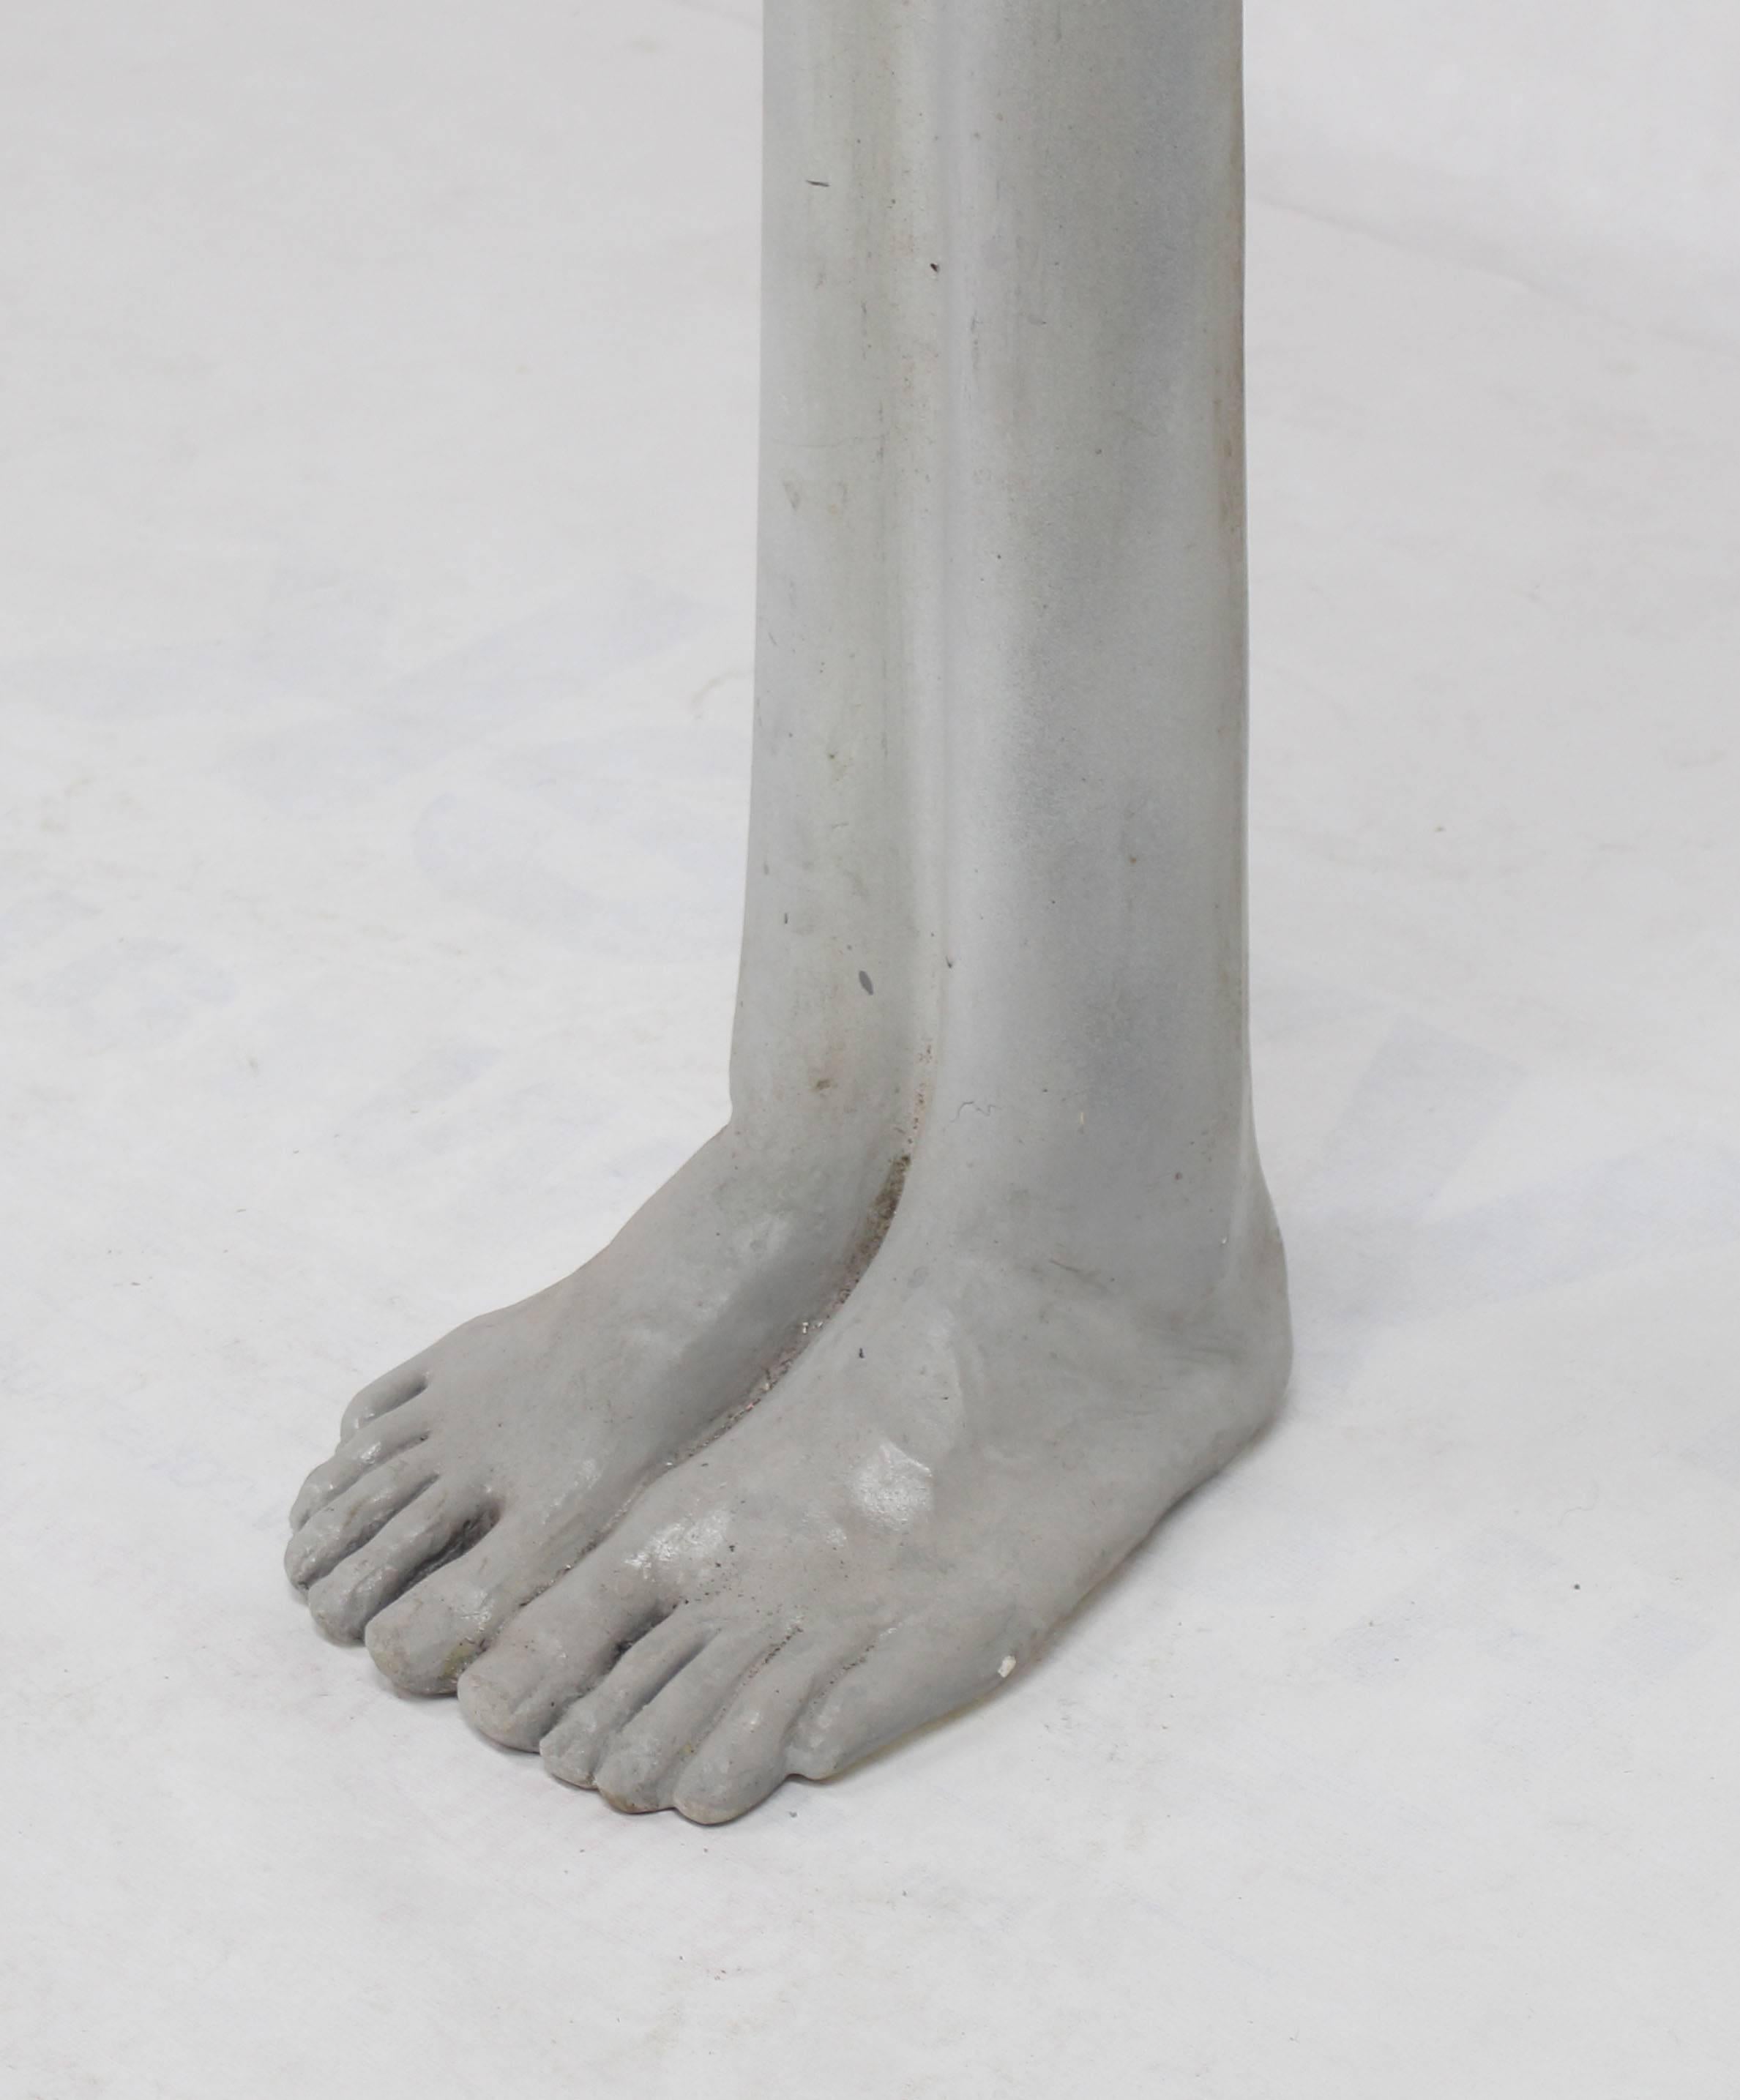 American Abstract Modern Pop Art Sculpture of Smile Standing on Feet